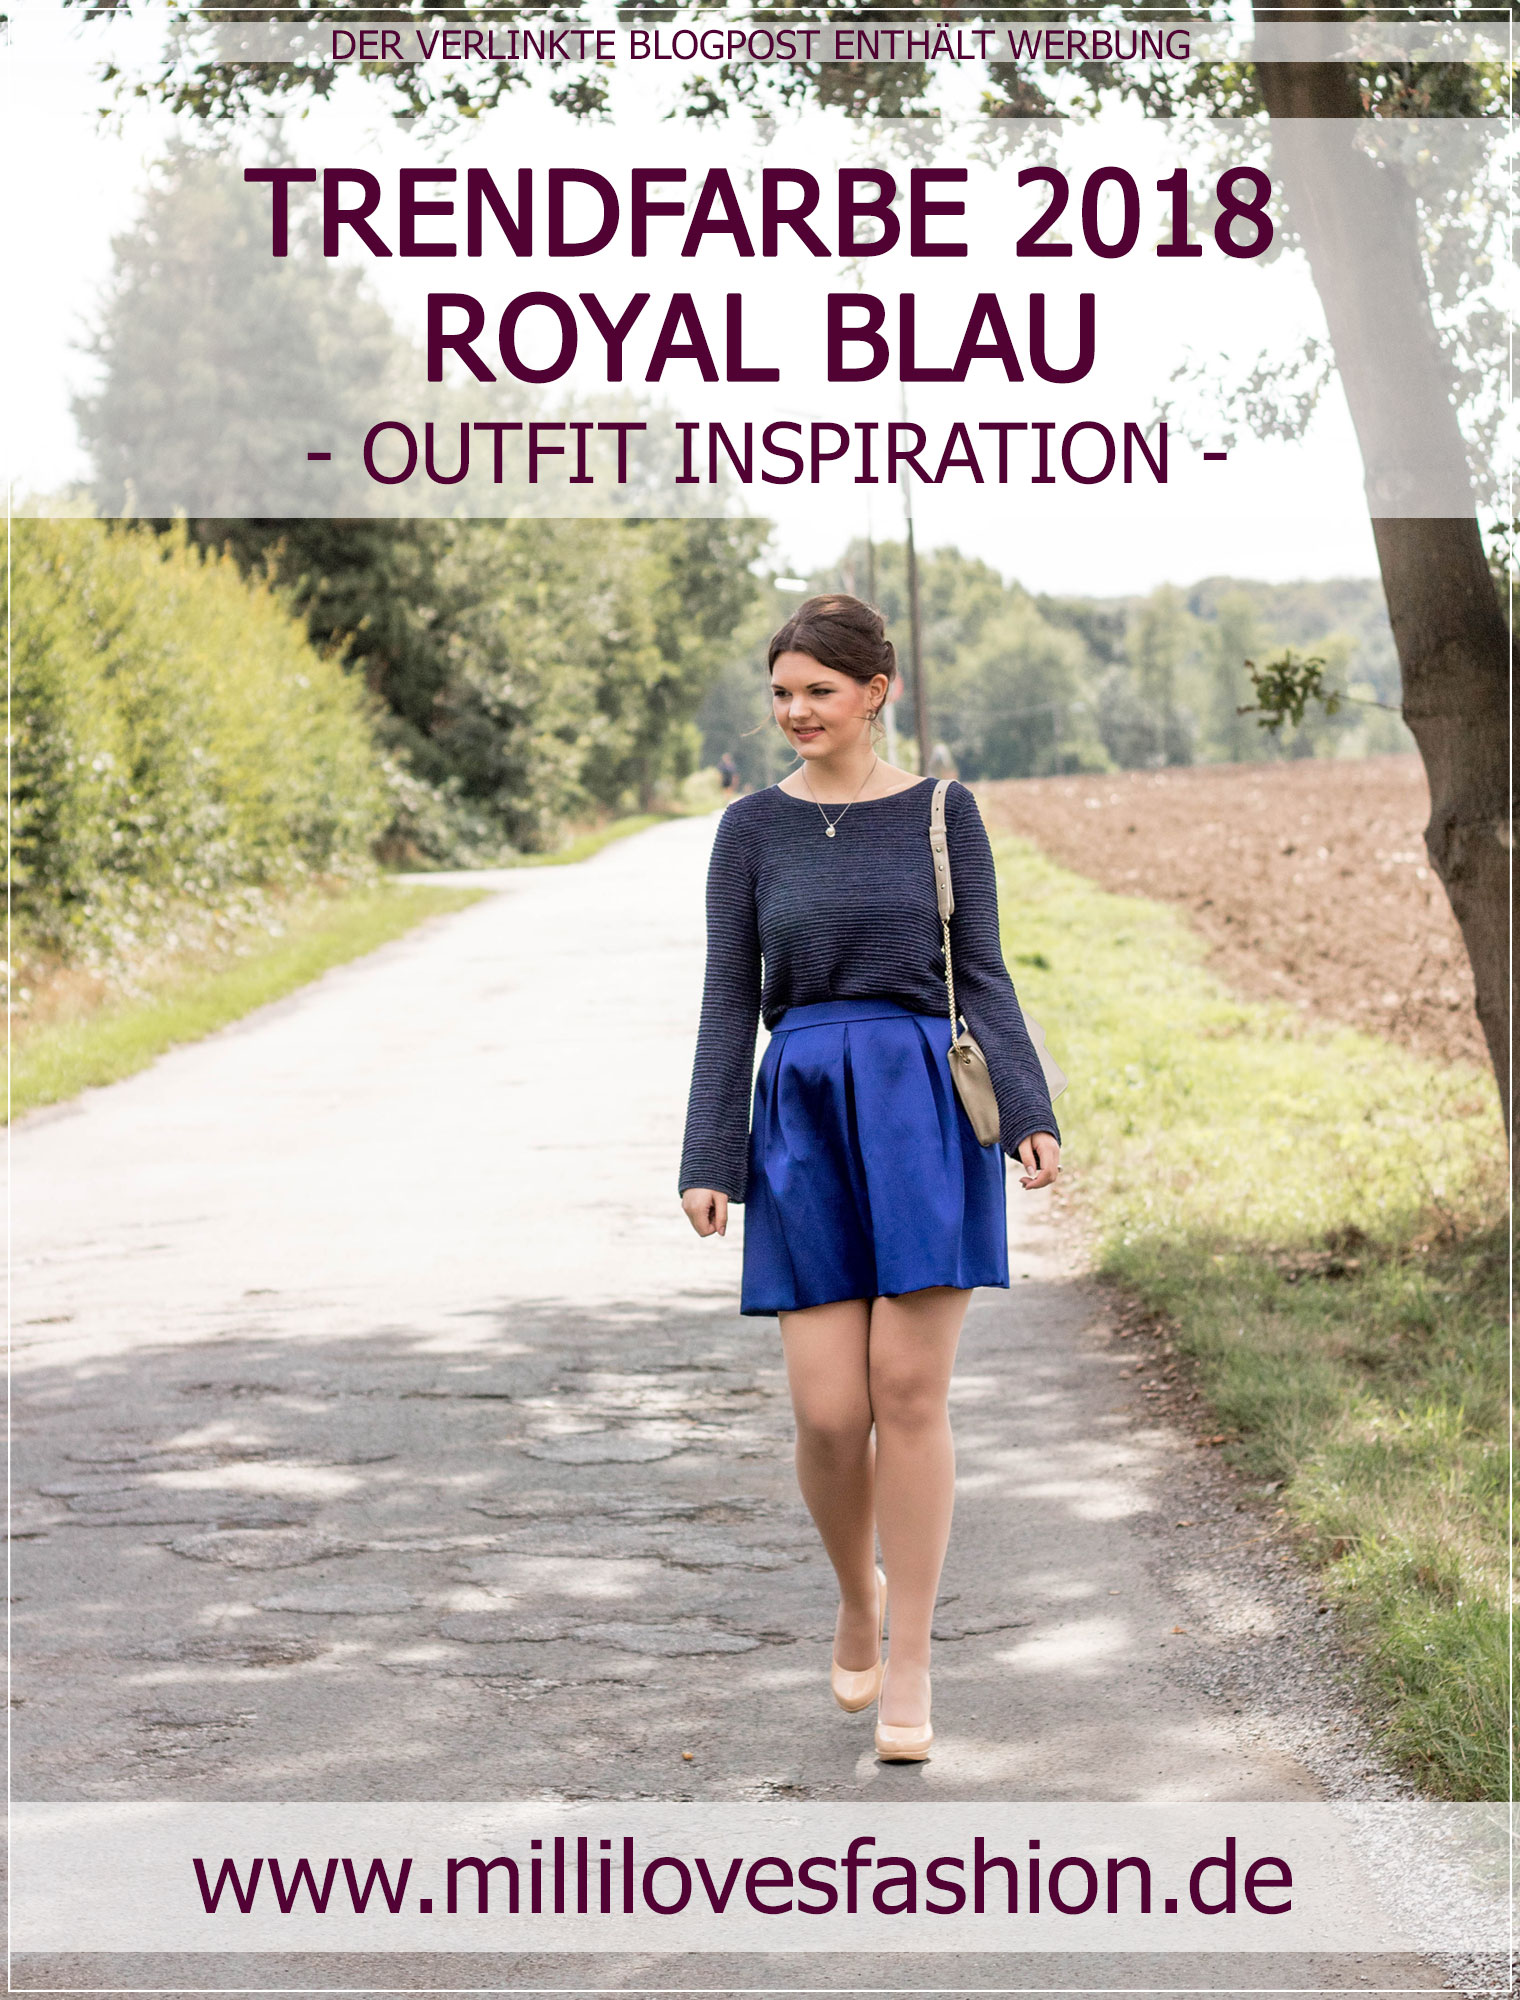 Royal Blau, Königsblau, Trendfarbe, Modetrend, eleganter Style, Herbstoutfit, Herbstlook, Outfitinspiration, Autumnstyle, Abendoutfit, Modebloggerin, Fashionbloggerin, Modeblog, Ruhrgebiet